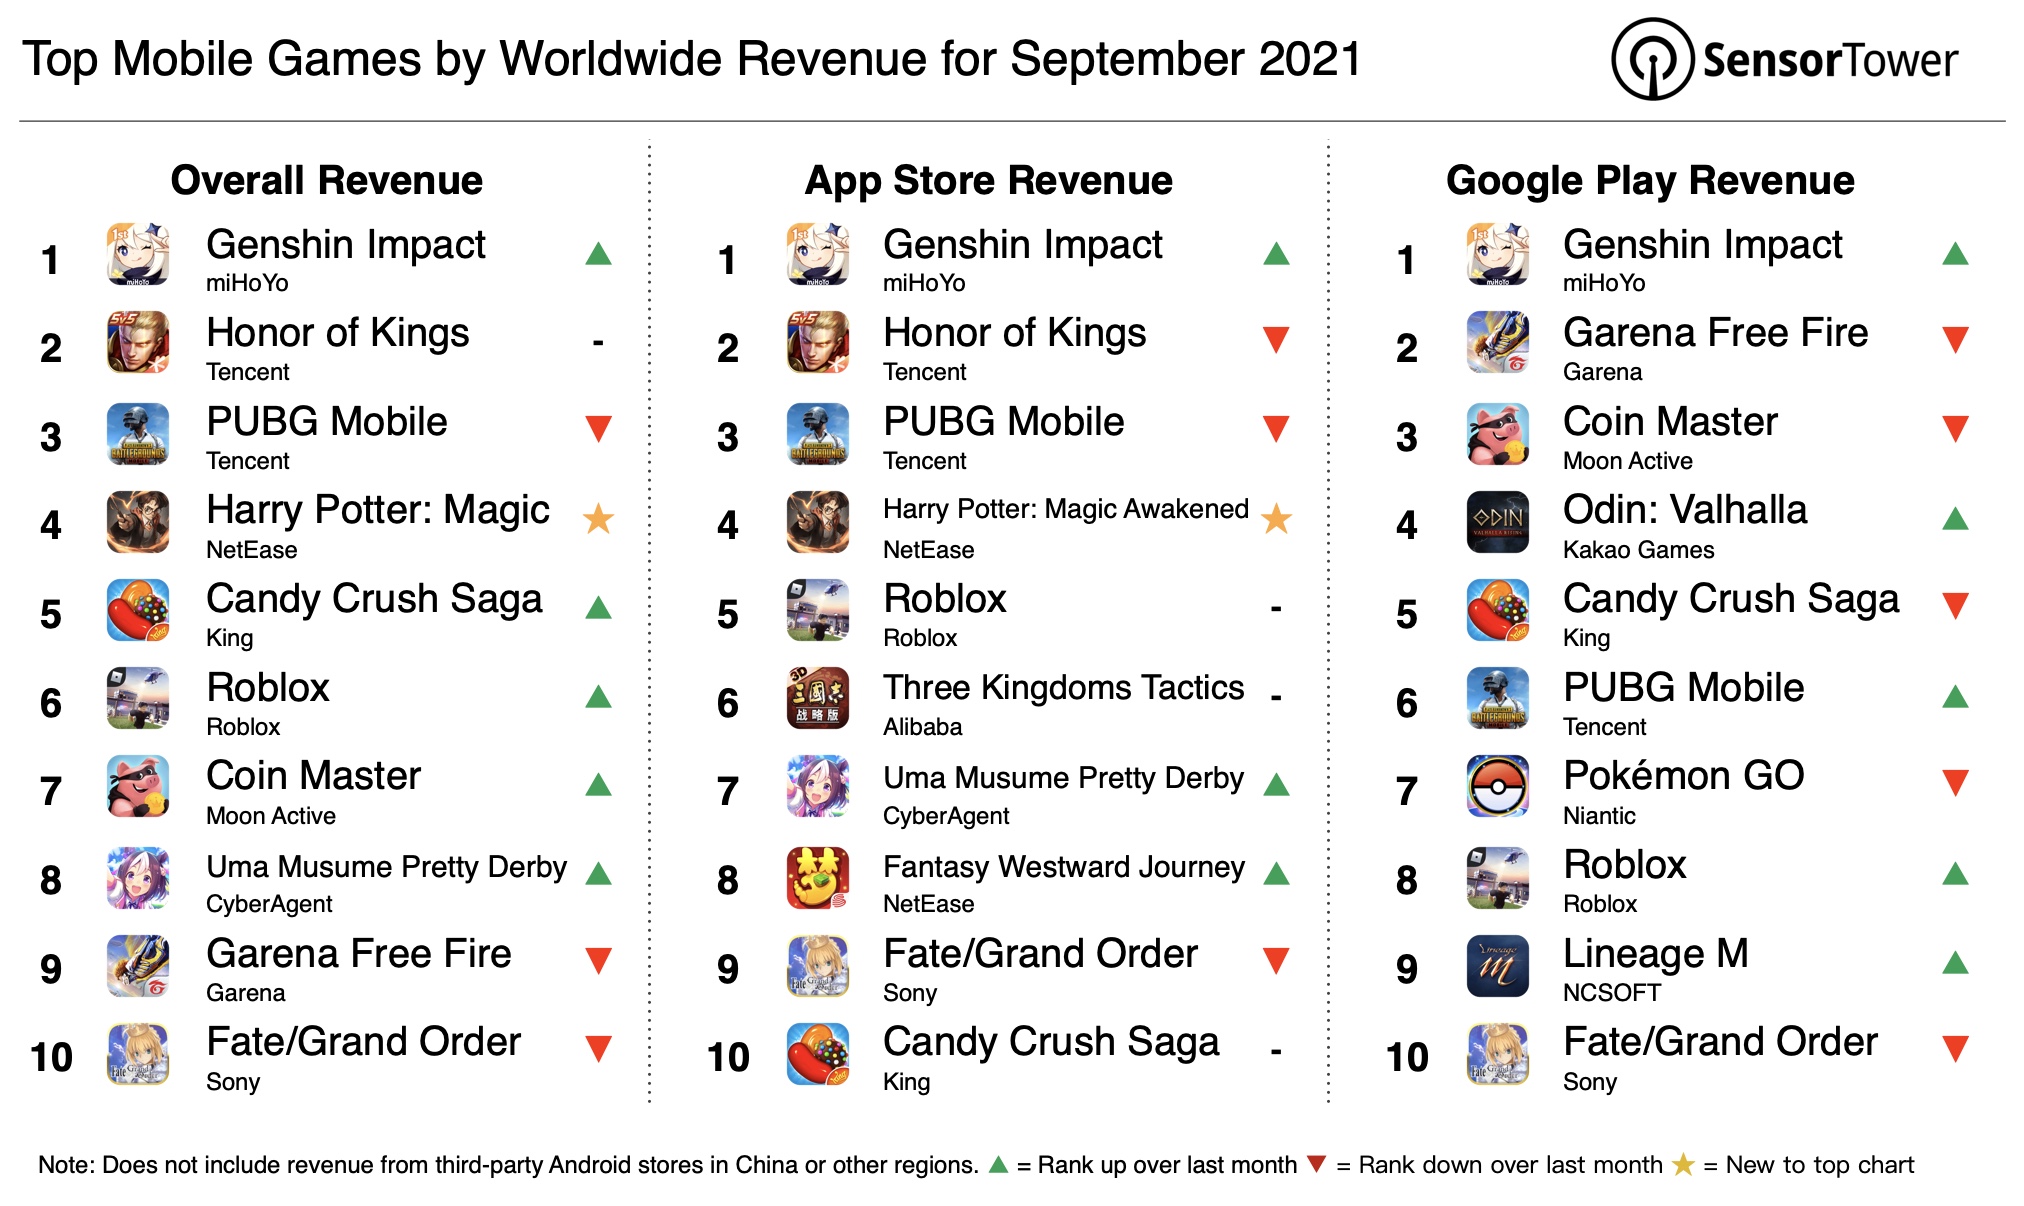 Top Grossing Mobile Games Worldwide for September 2021